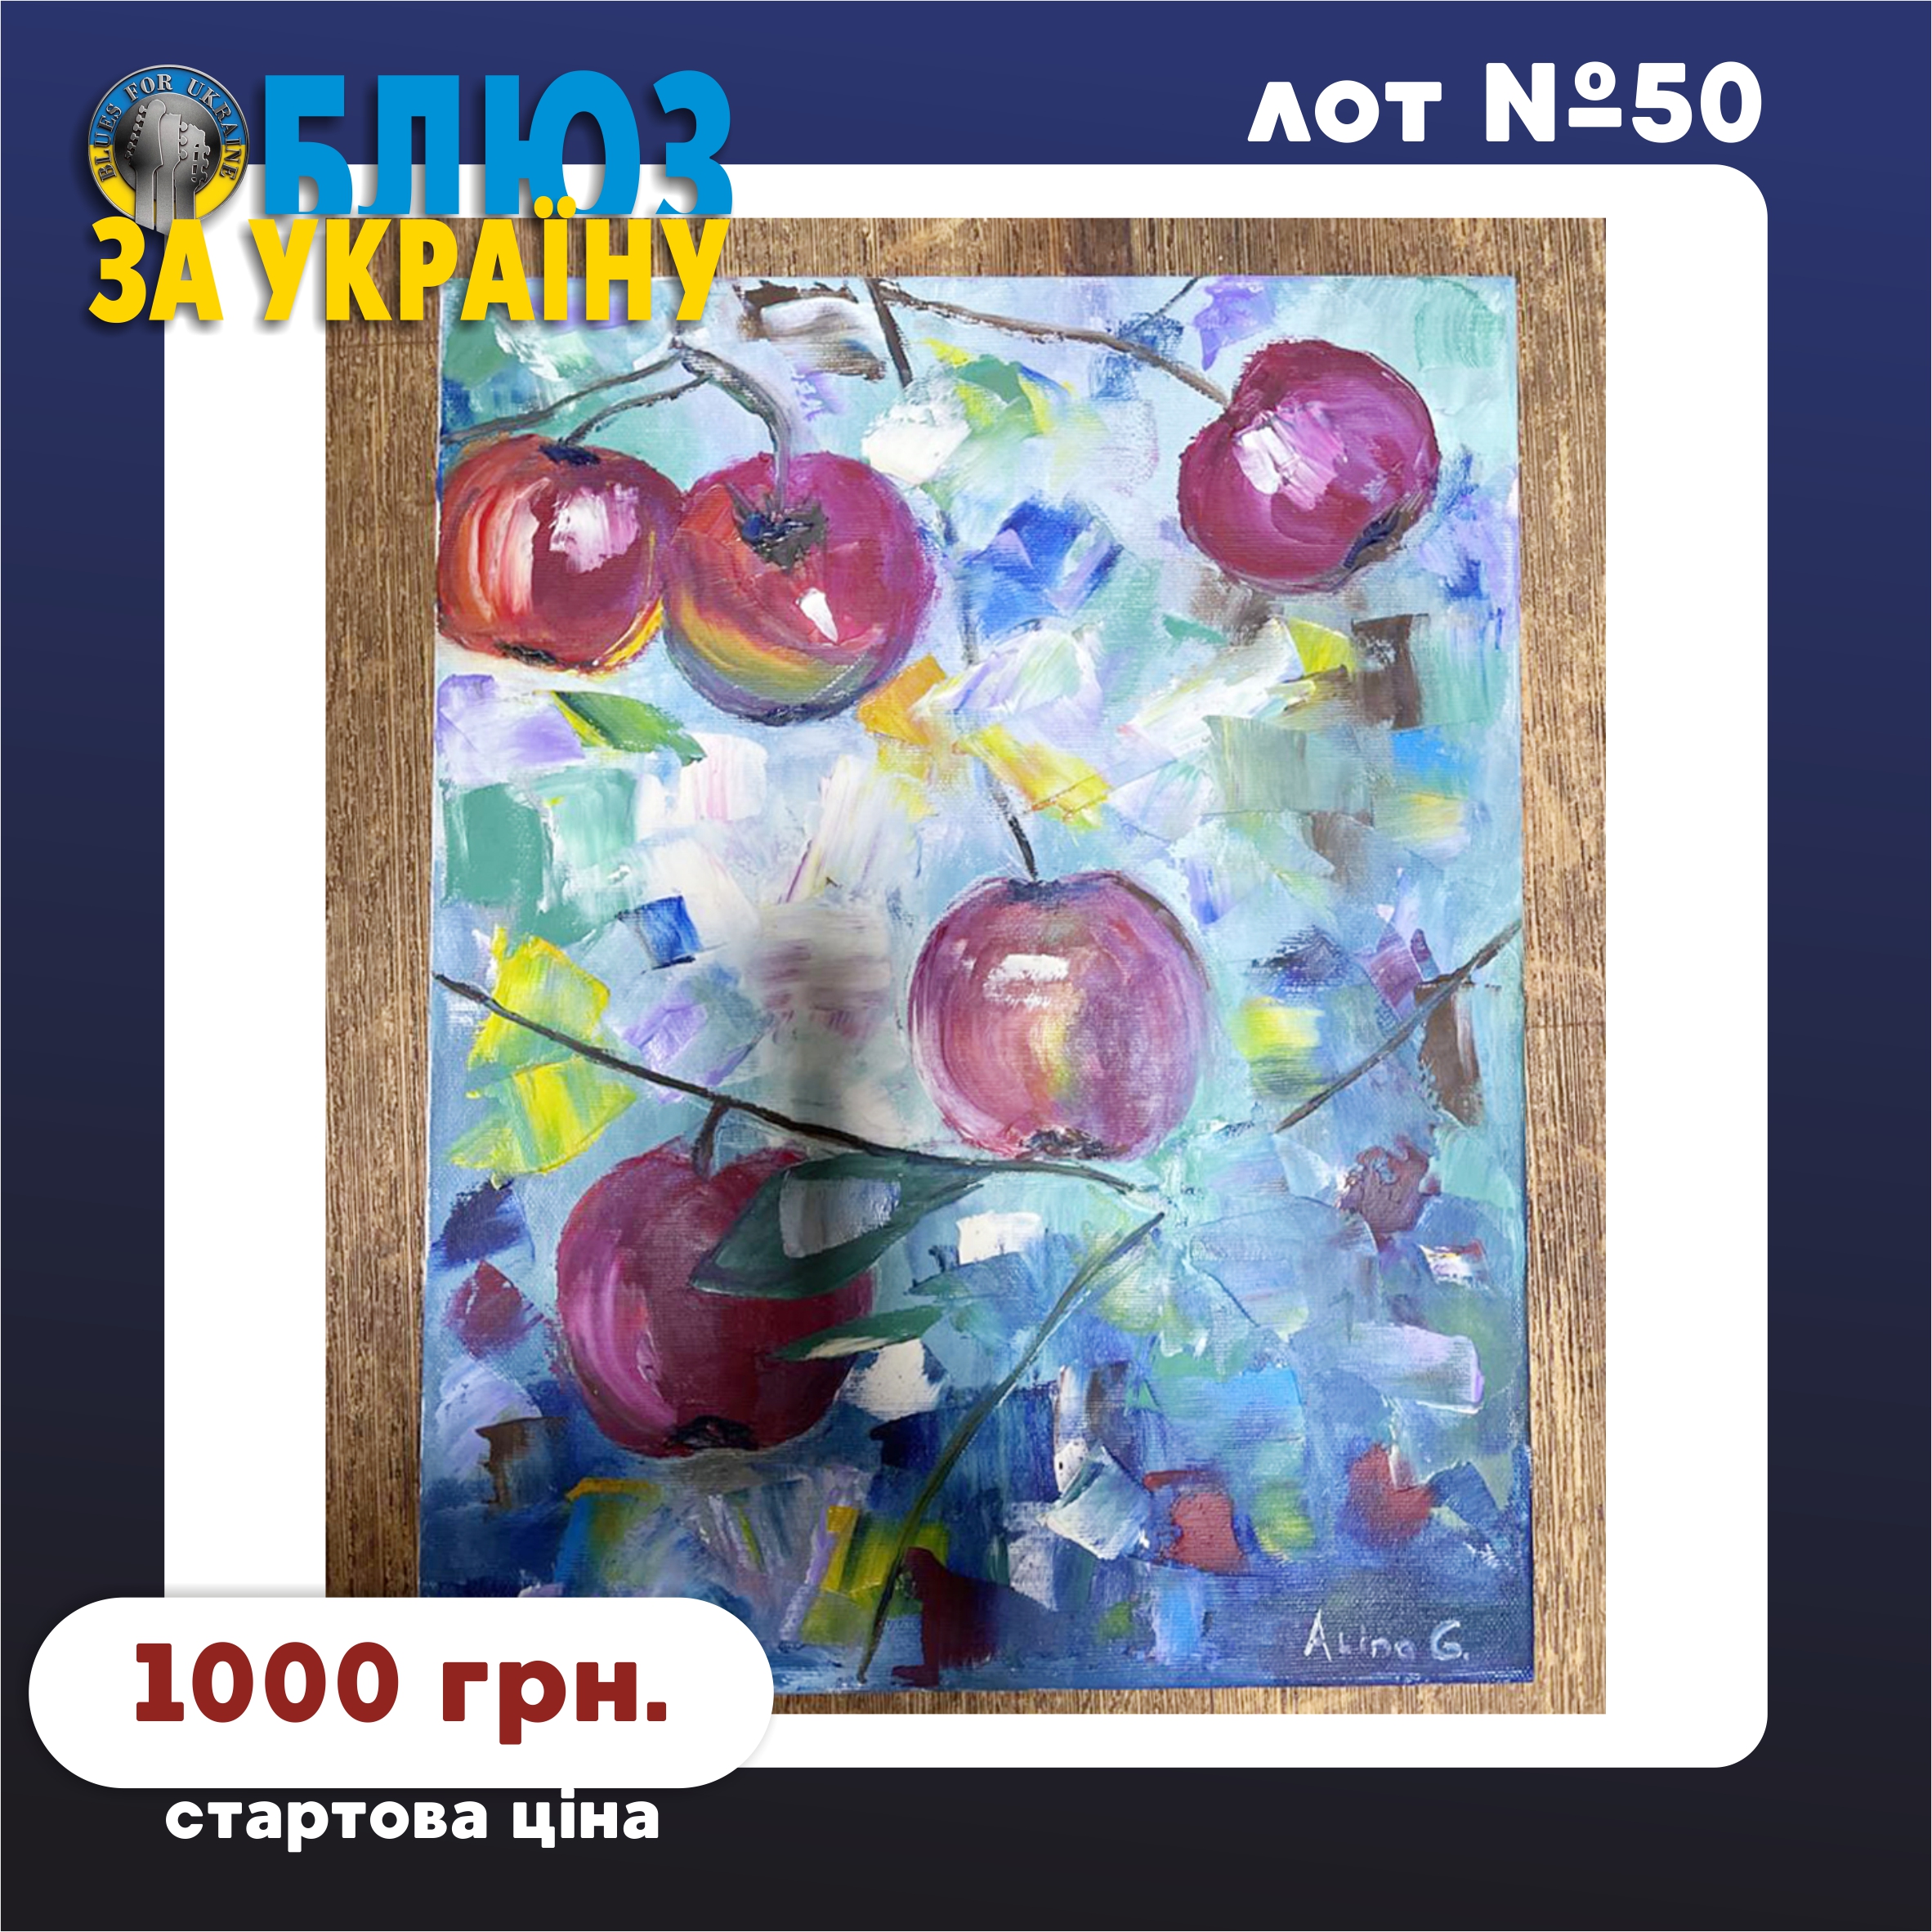 Lot №50. Картина "Яблука" (Painting "Apples")